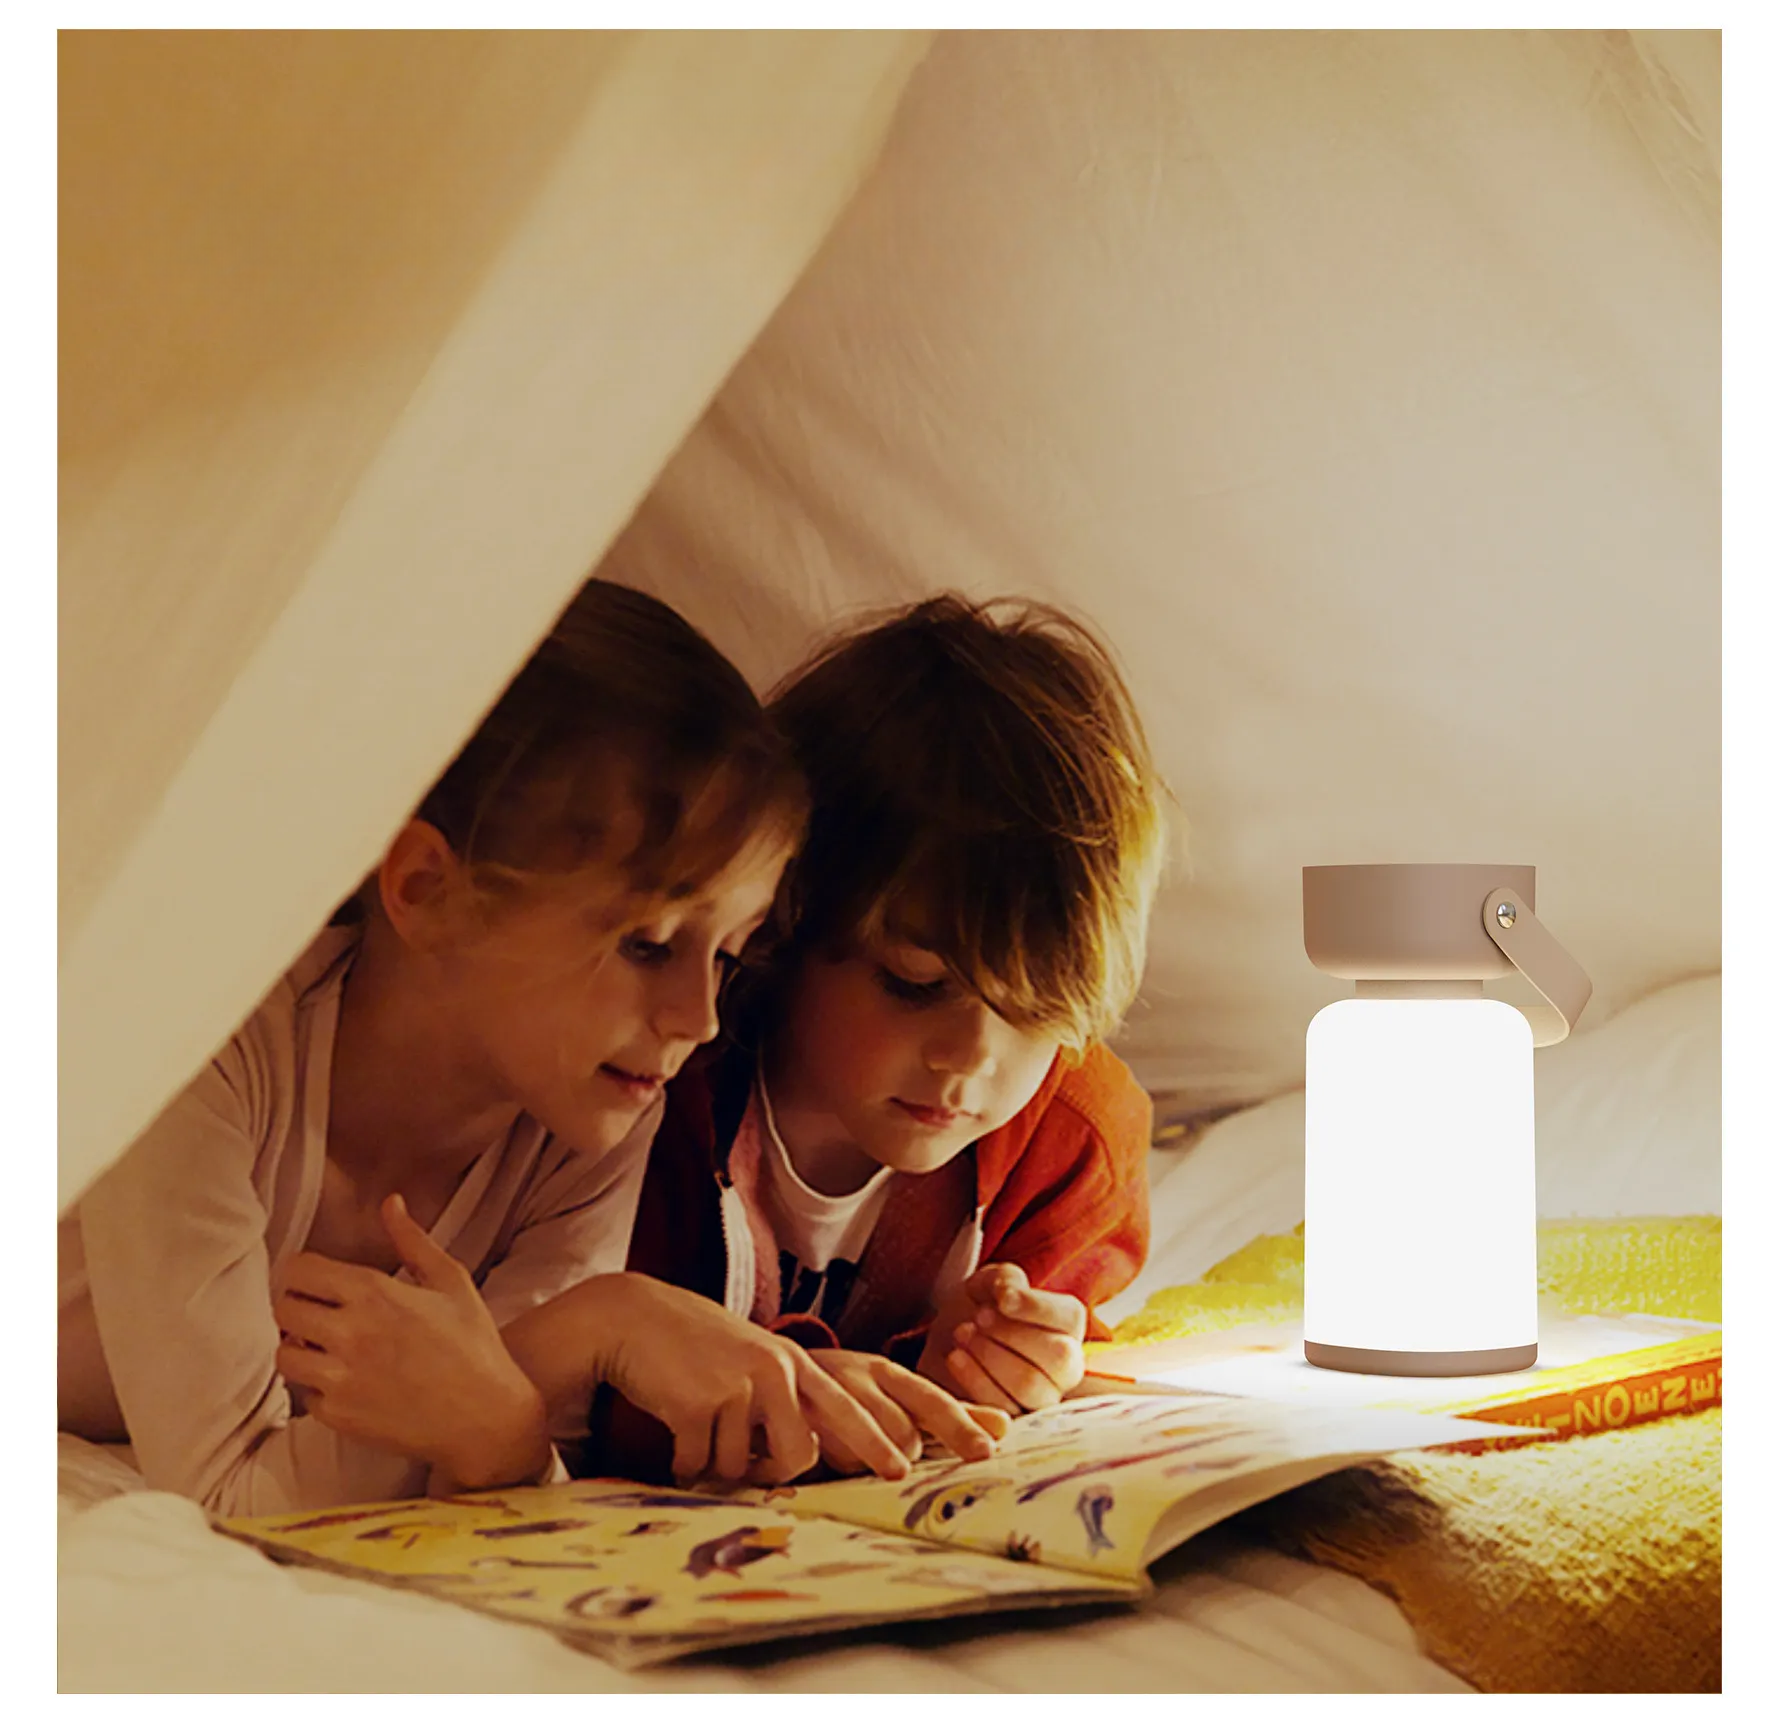 Portable LED Flood Light | Outdoor Camping Light | Hangable Light